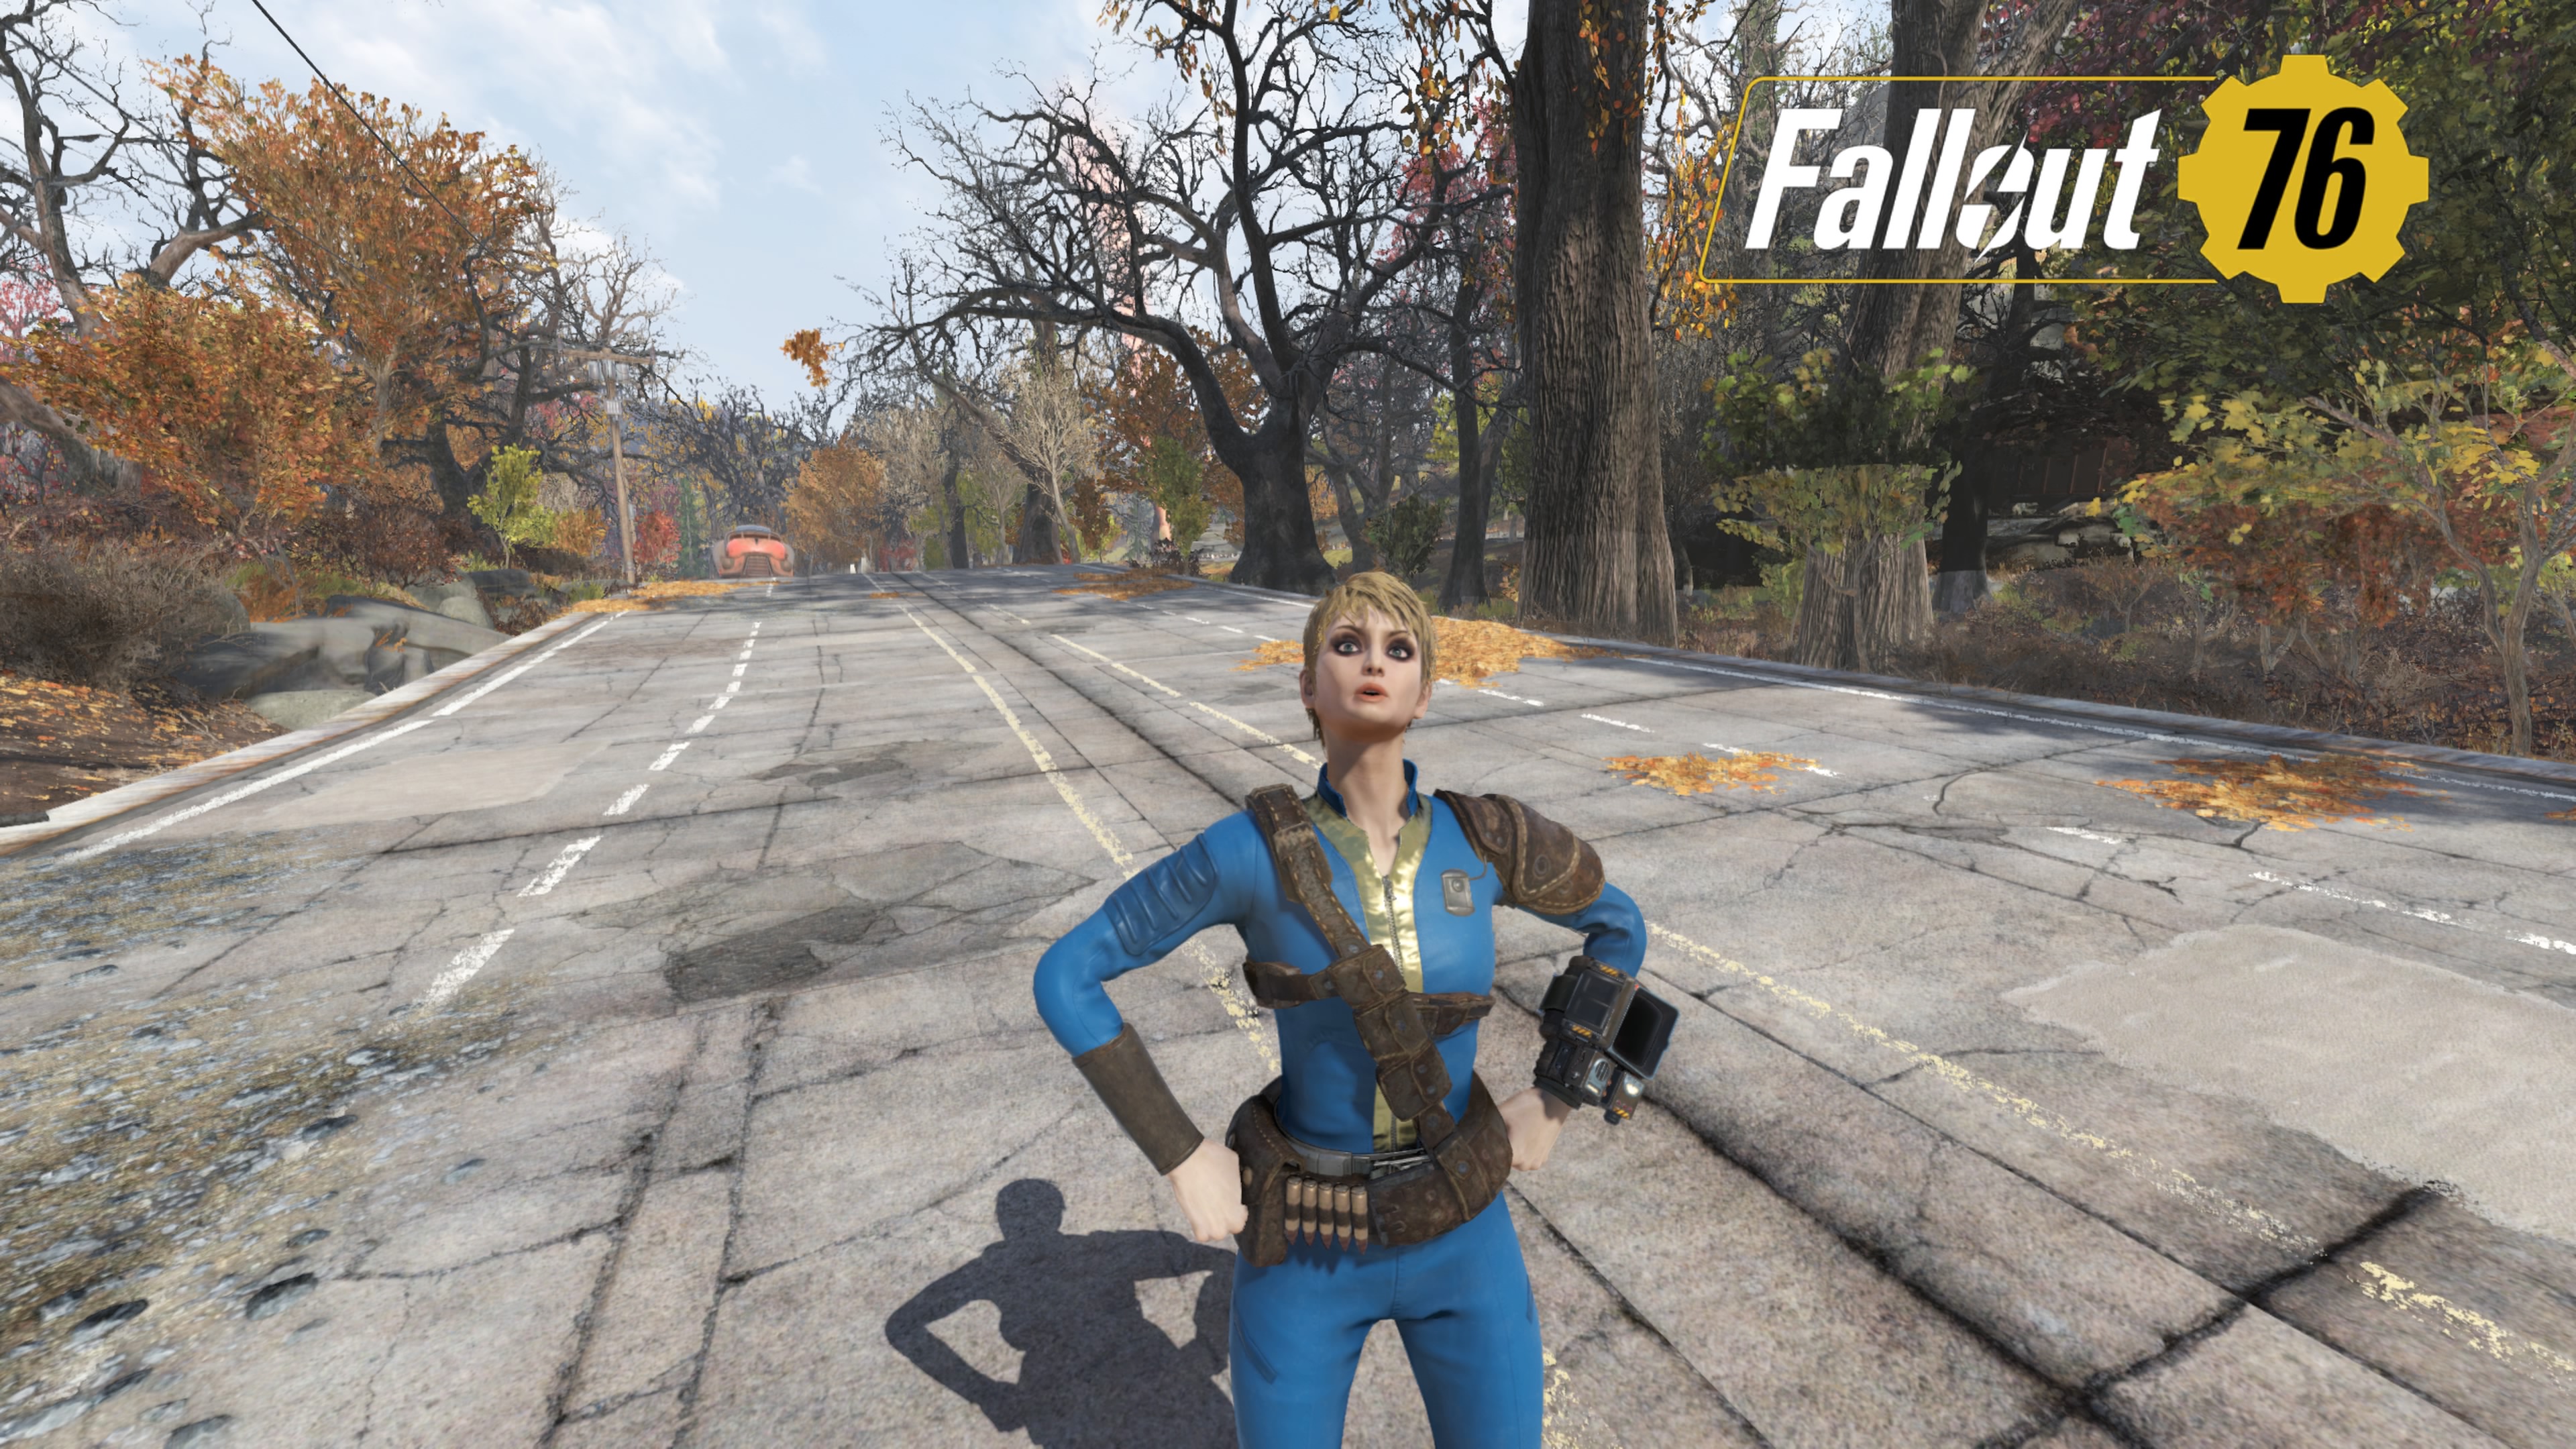 Fallout76 ベータの感想 評価 ソロプレイはどう